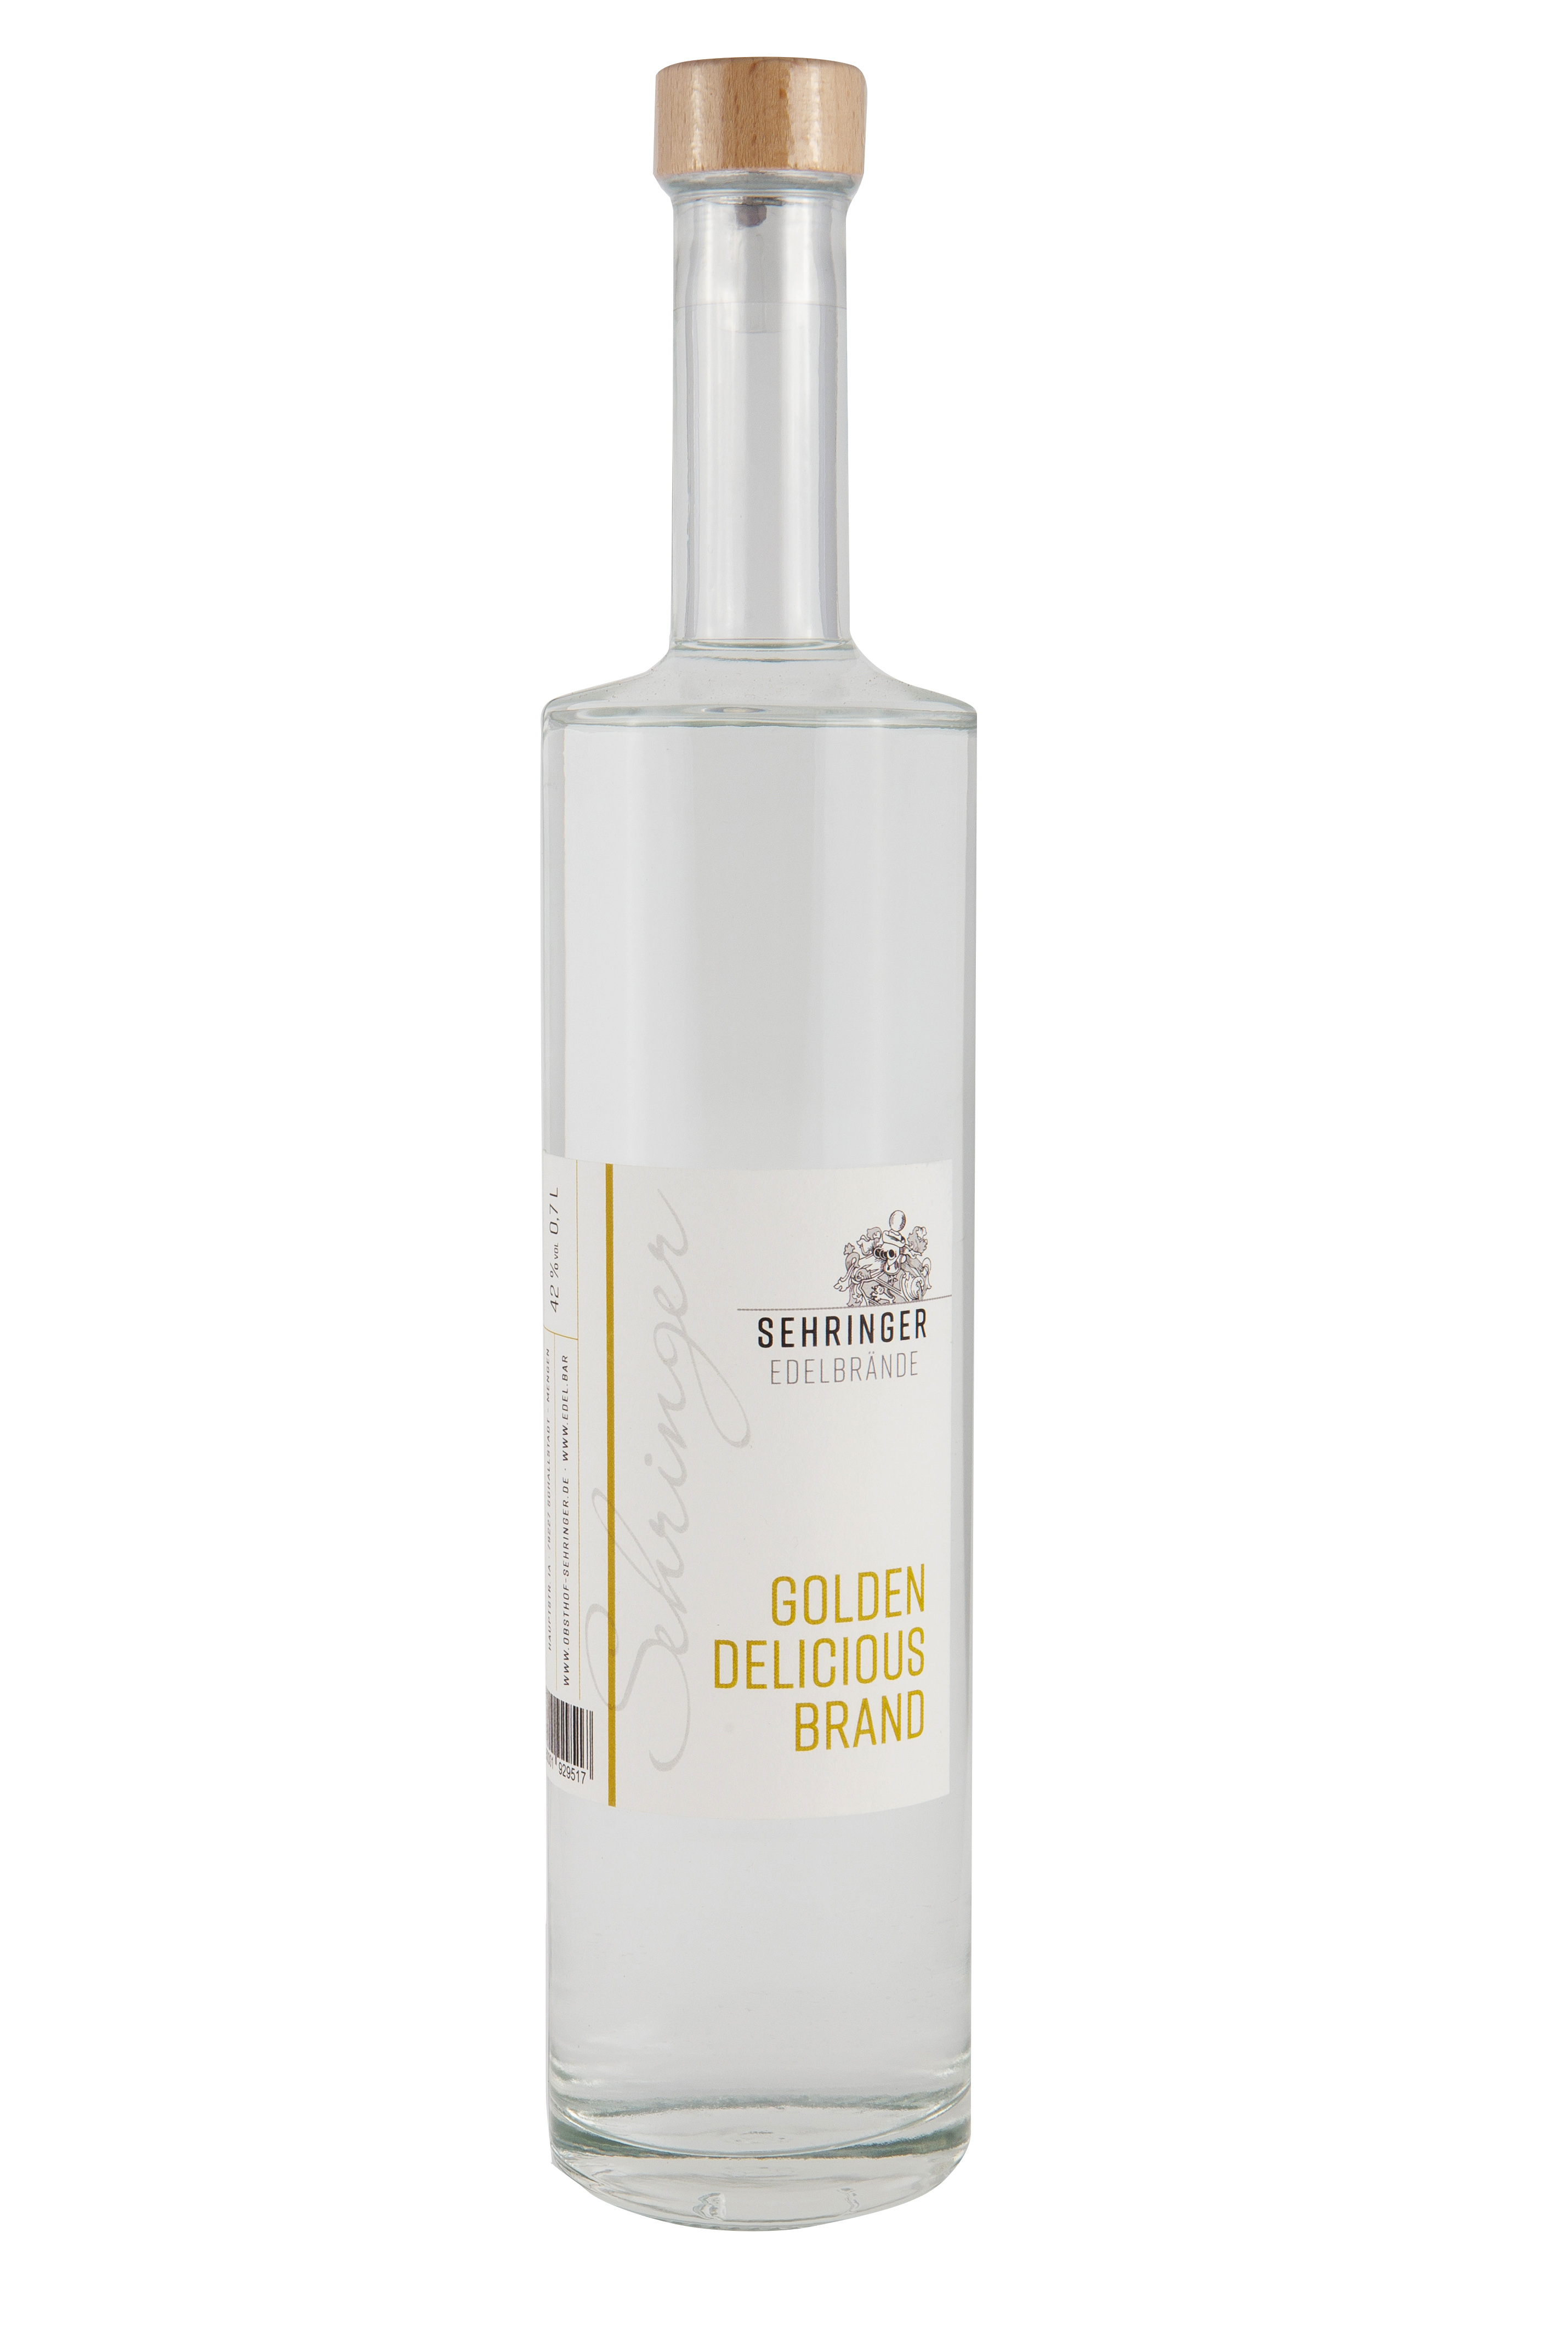 Sehringer Golden - Deliciousschnaps 45%vol, 0,7l